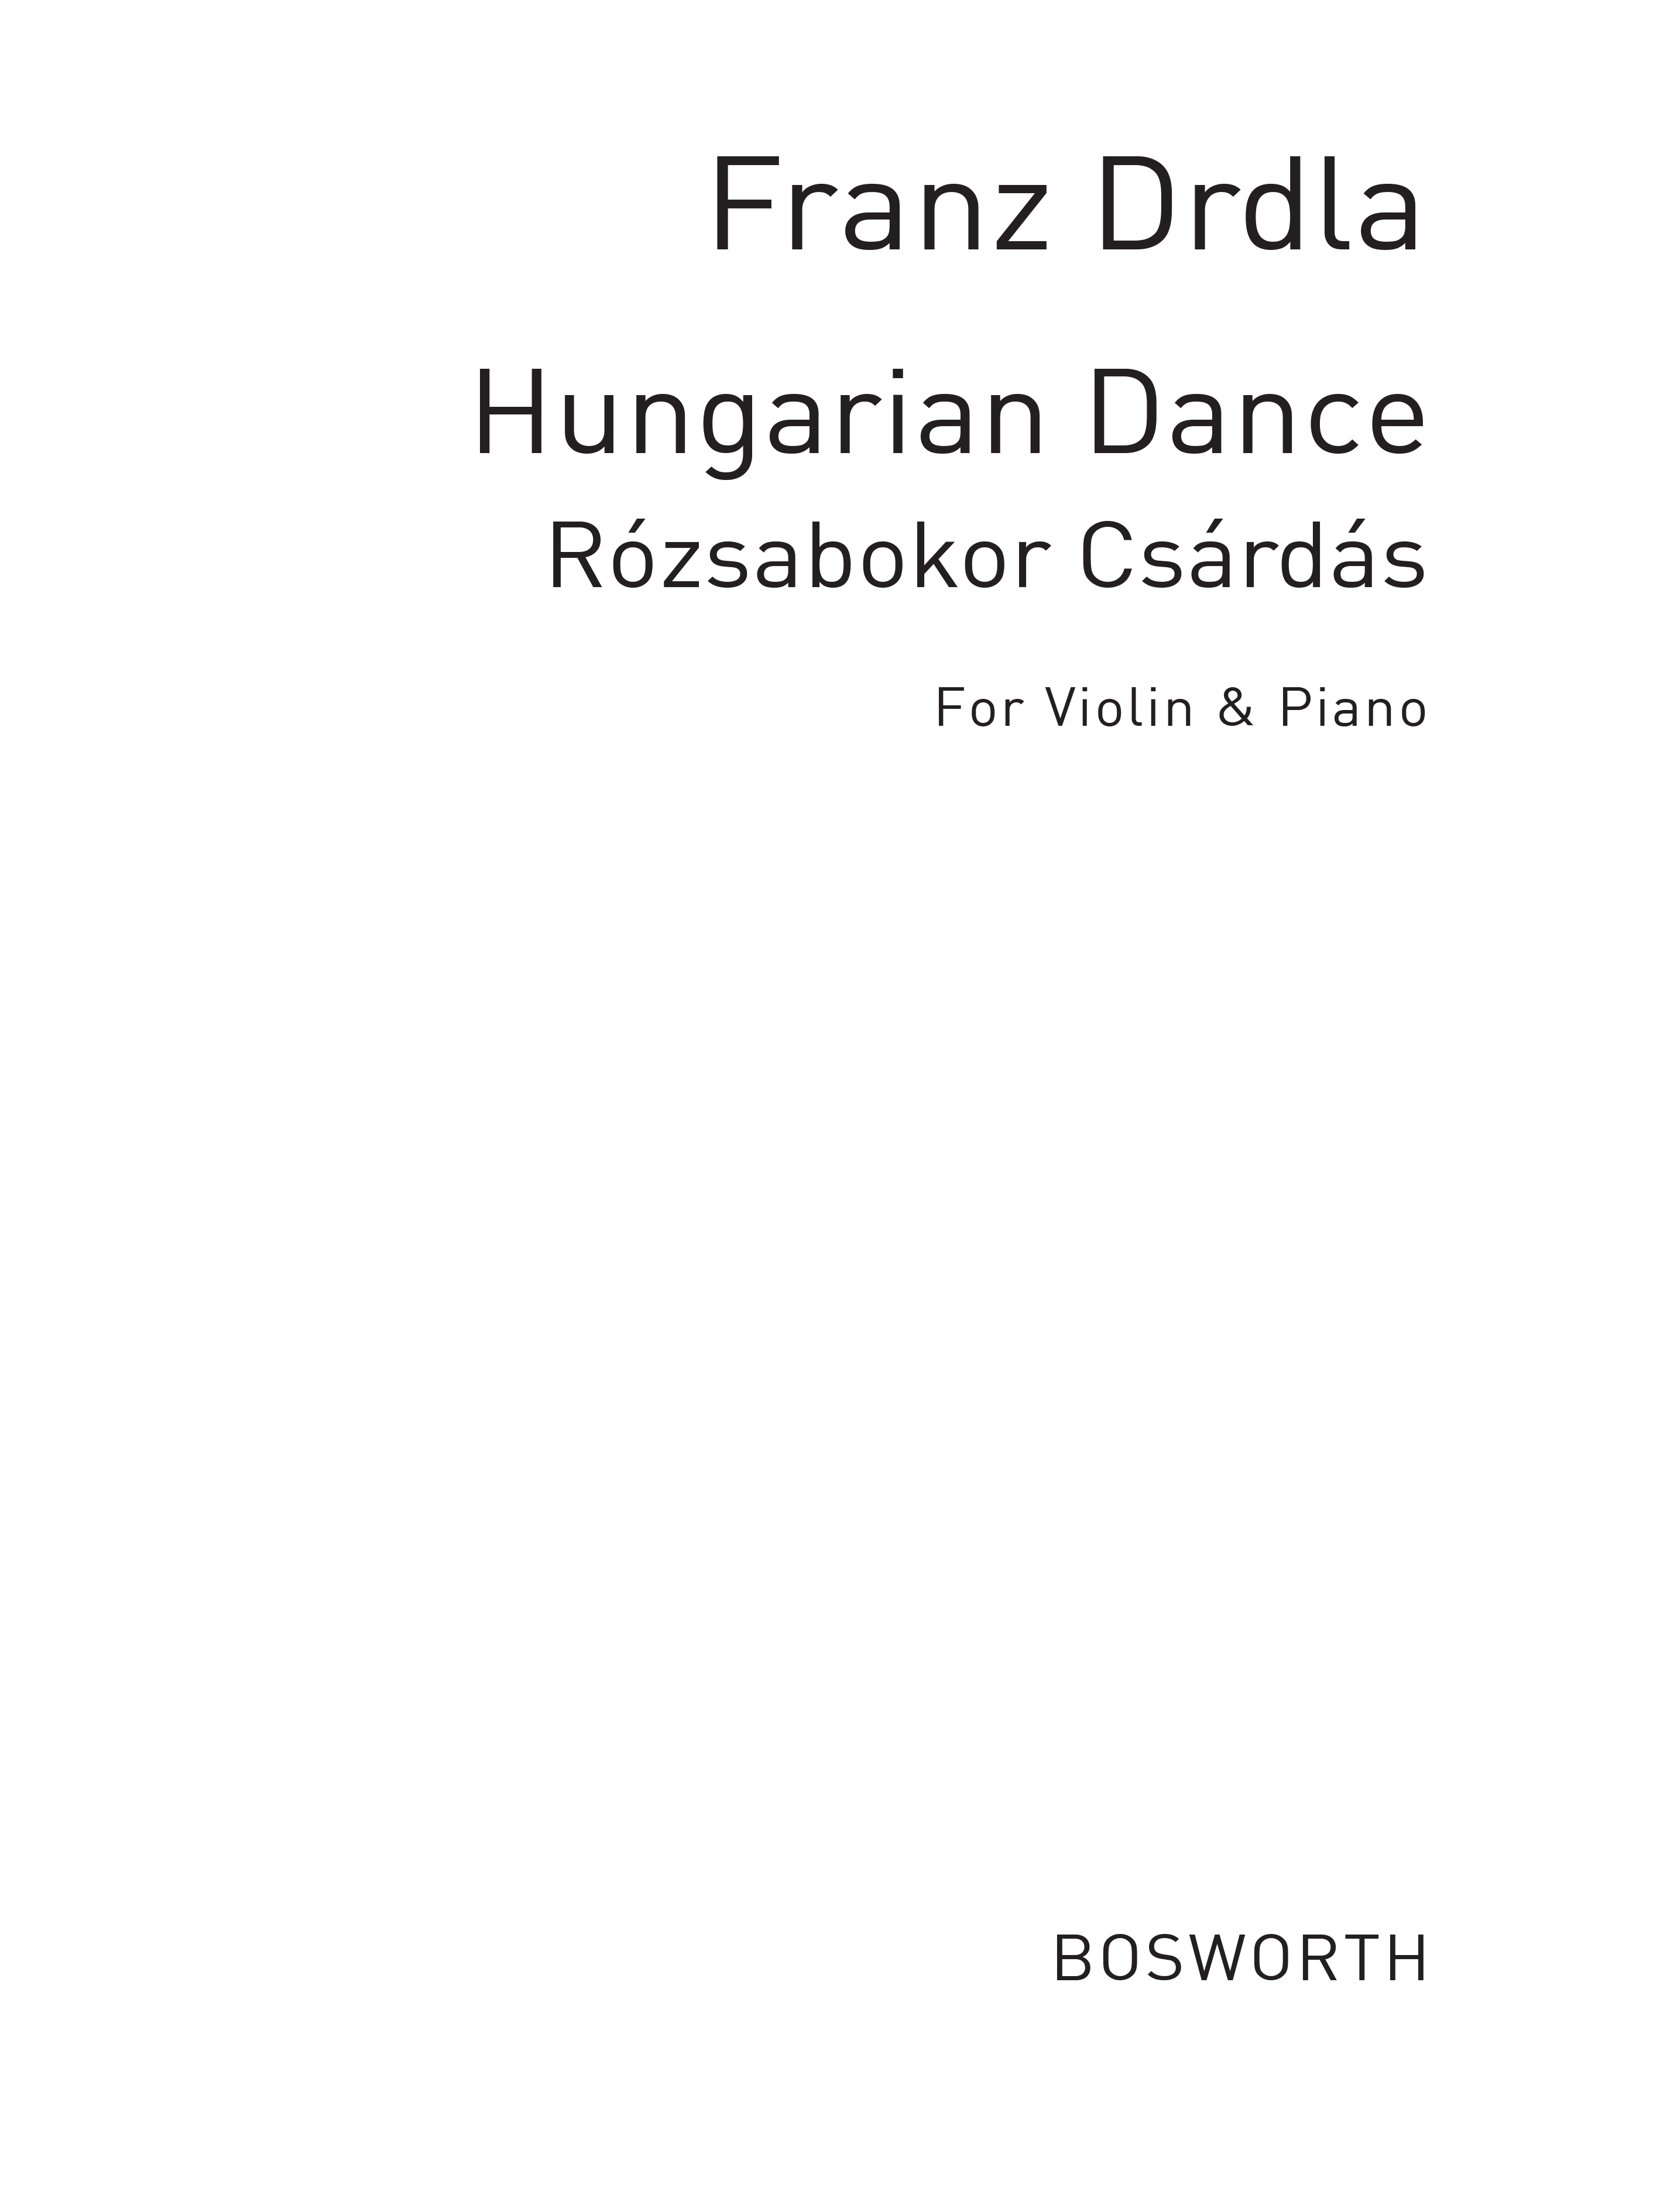 Franz Drdla: Hungarian Dances Op.30 No.7 'Roszabokor Csardas': Violin: